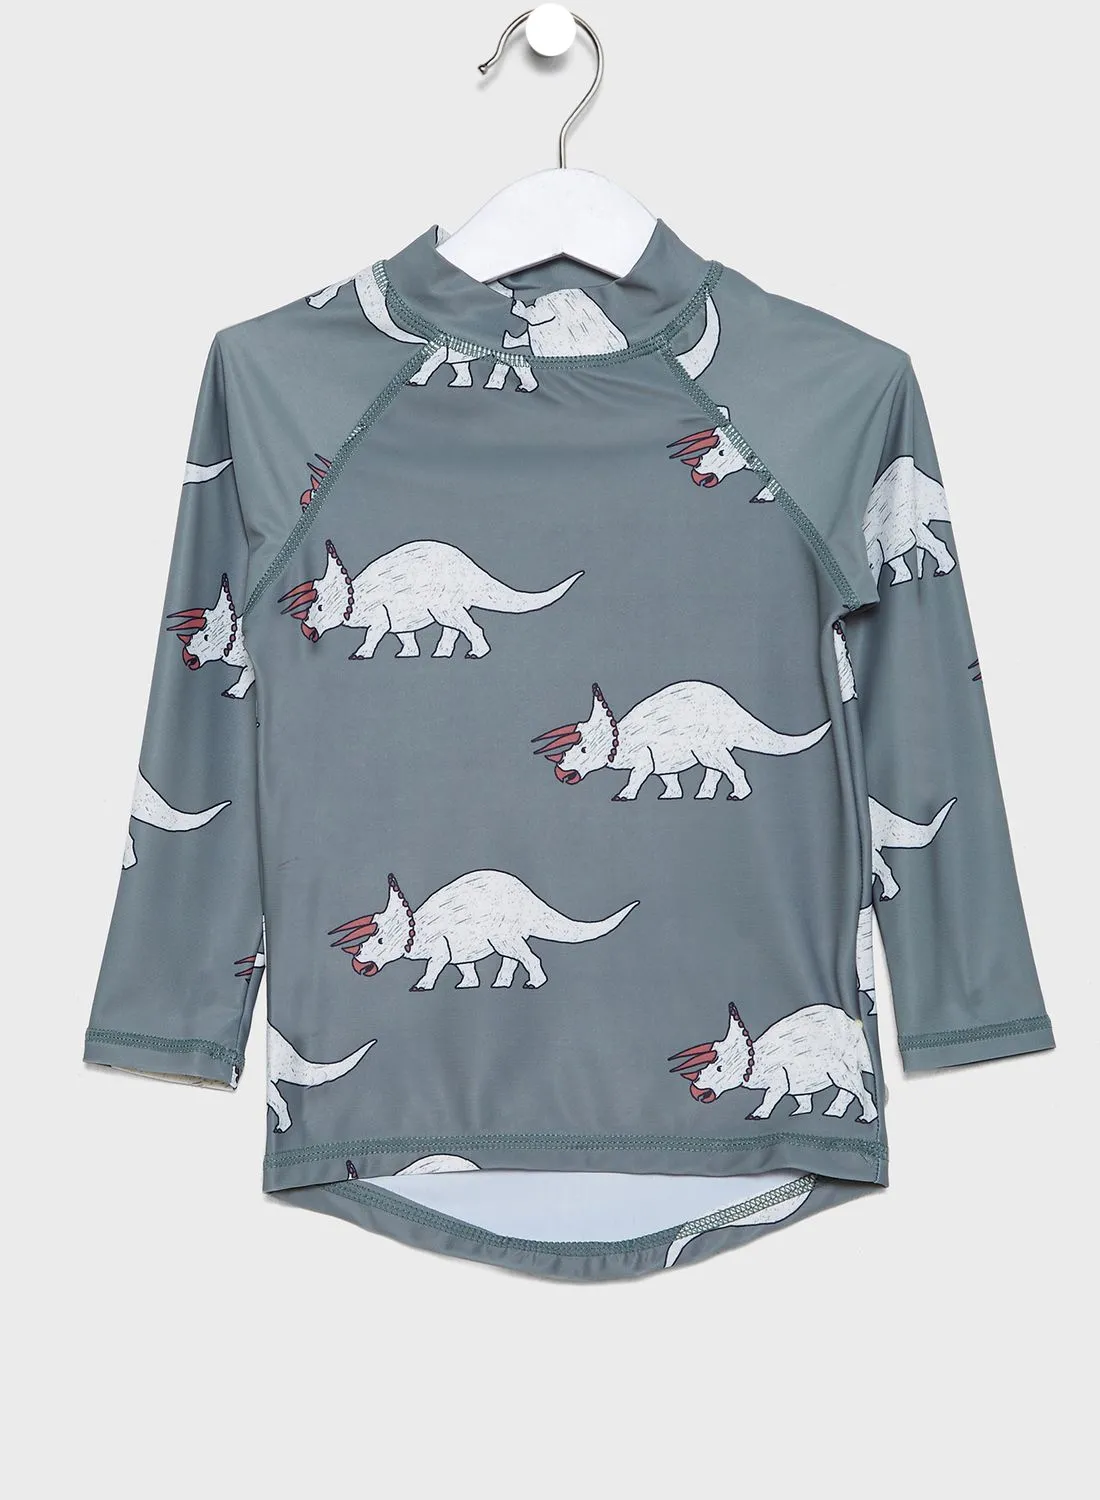 Cotton On Kids Dino Print T-Shirt